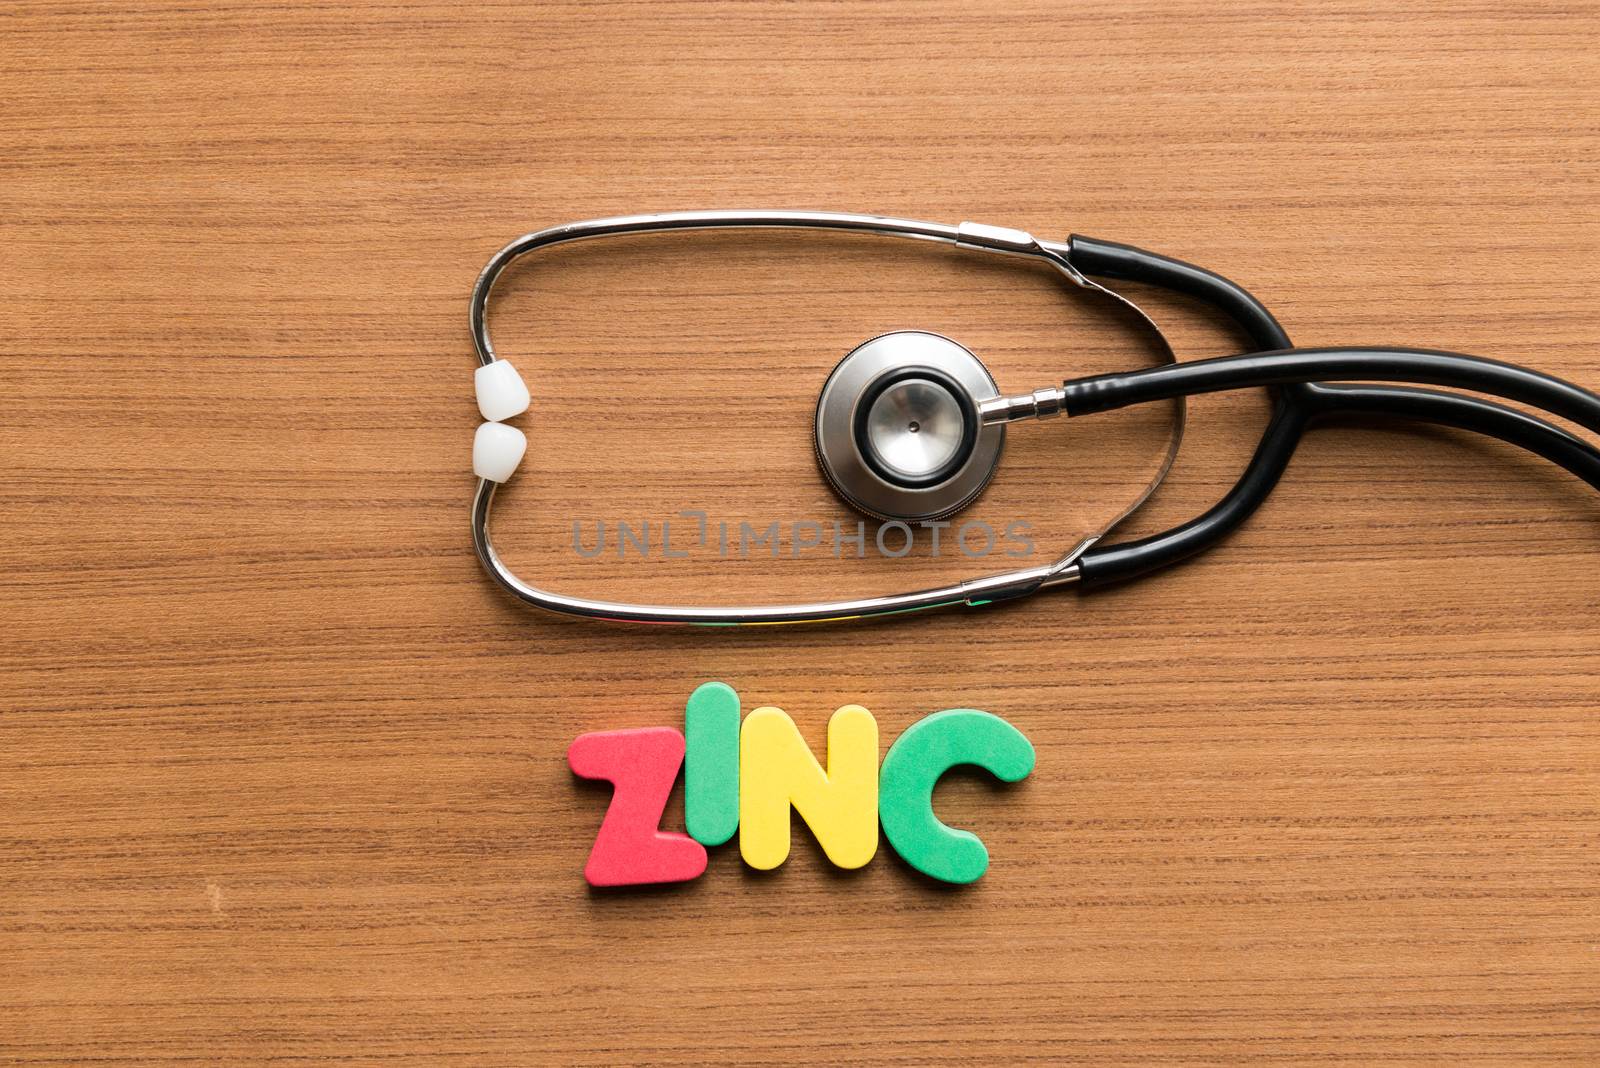 zinc colorful word with stethoscope by sohel.parvez@hotmail.com